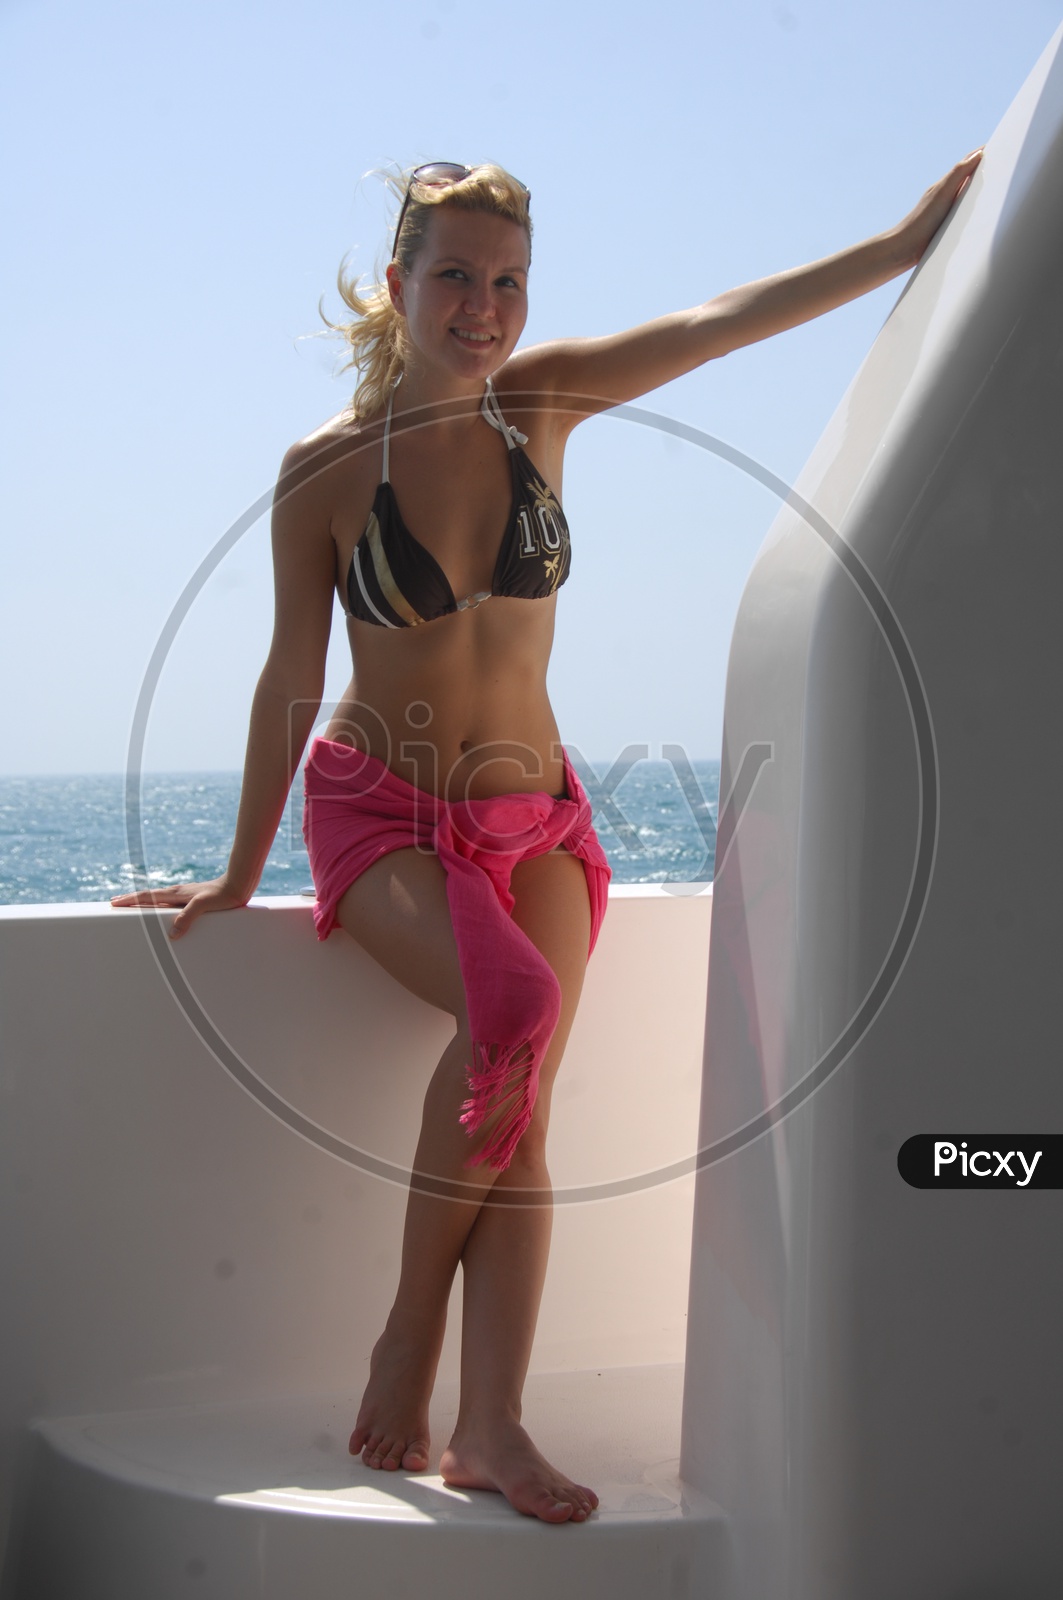 Woman Wearing  Swim wear And Posing in a Yacht